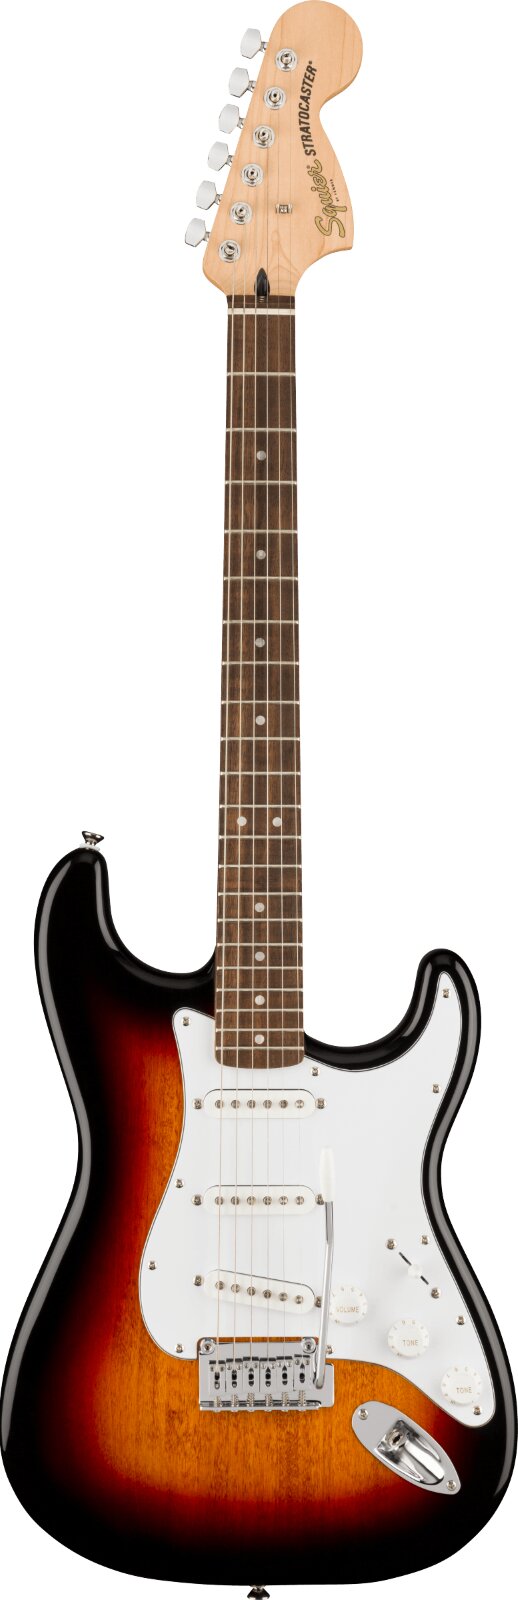 Squier Affinity Series Stratocaster, Laurel Fingerboard, White Pickguard, 3-Color Sunburst : photo 1